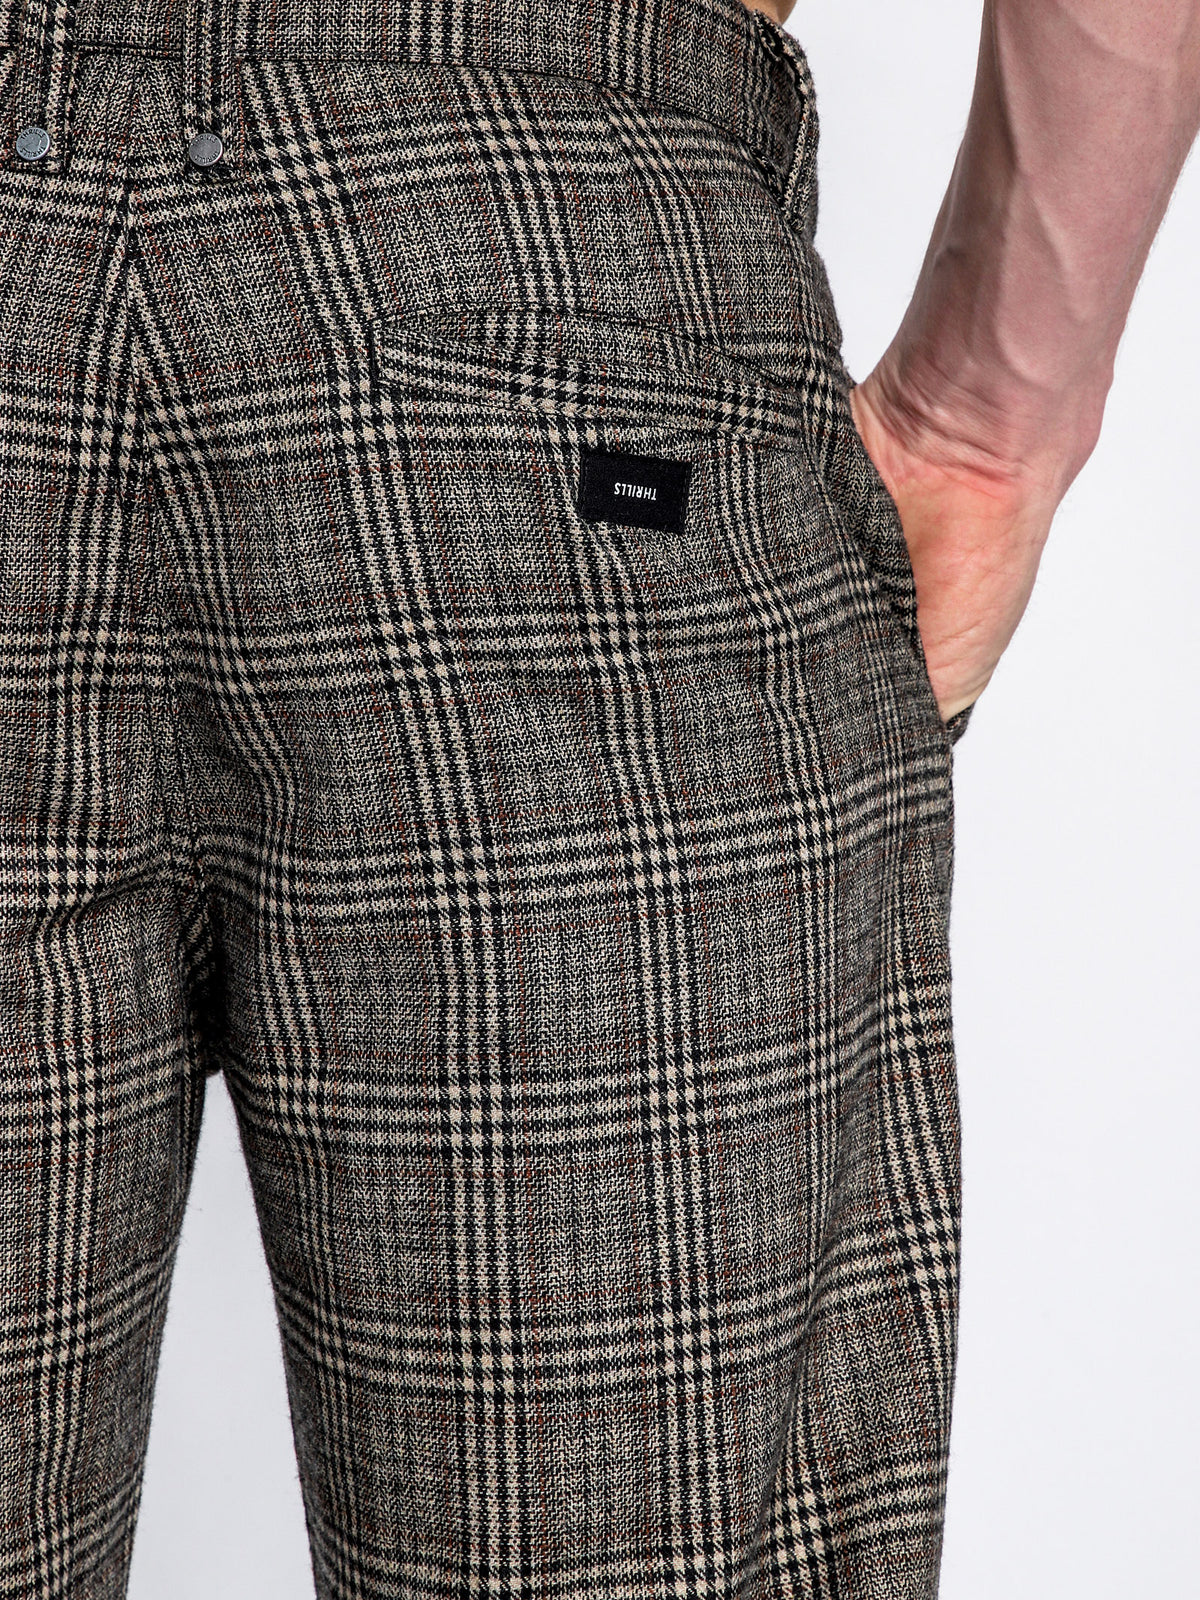 London Cropped Wool Pants in Tan &amp; Brown Check